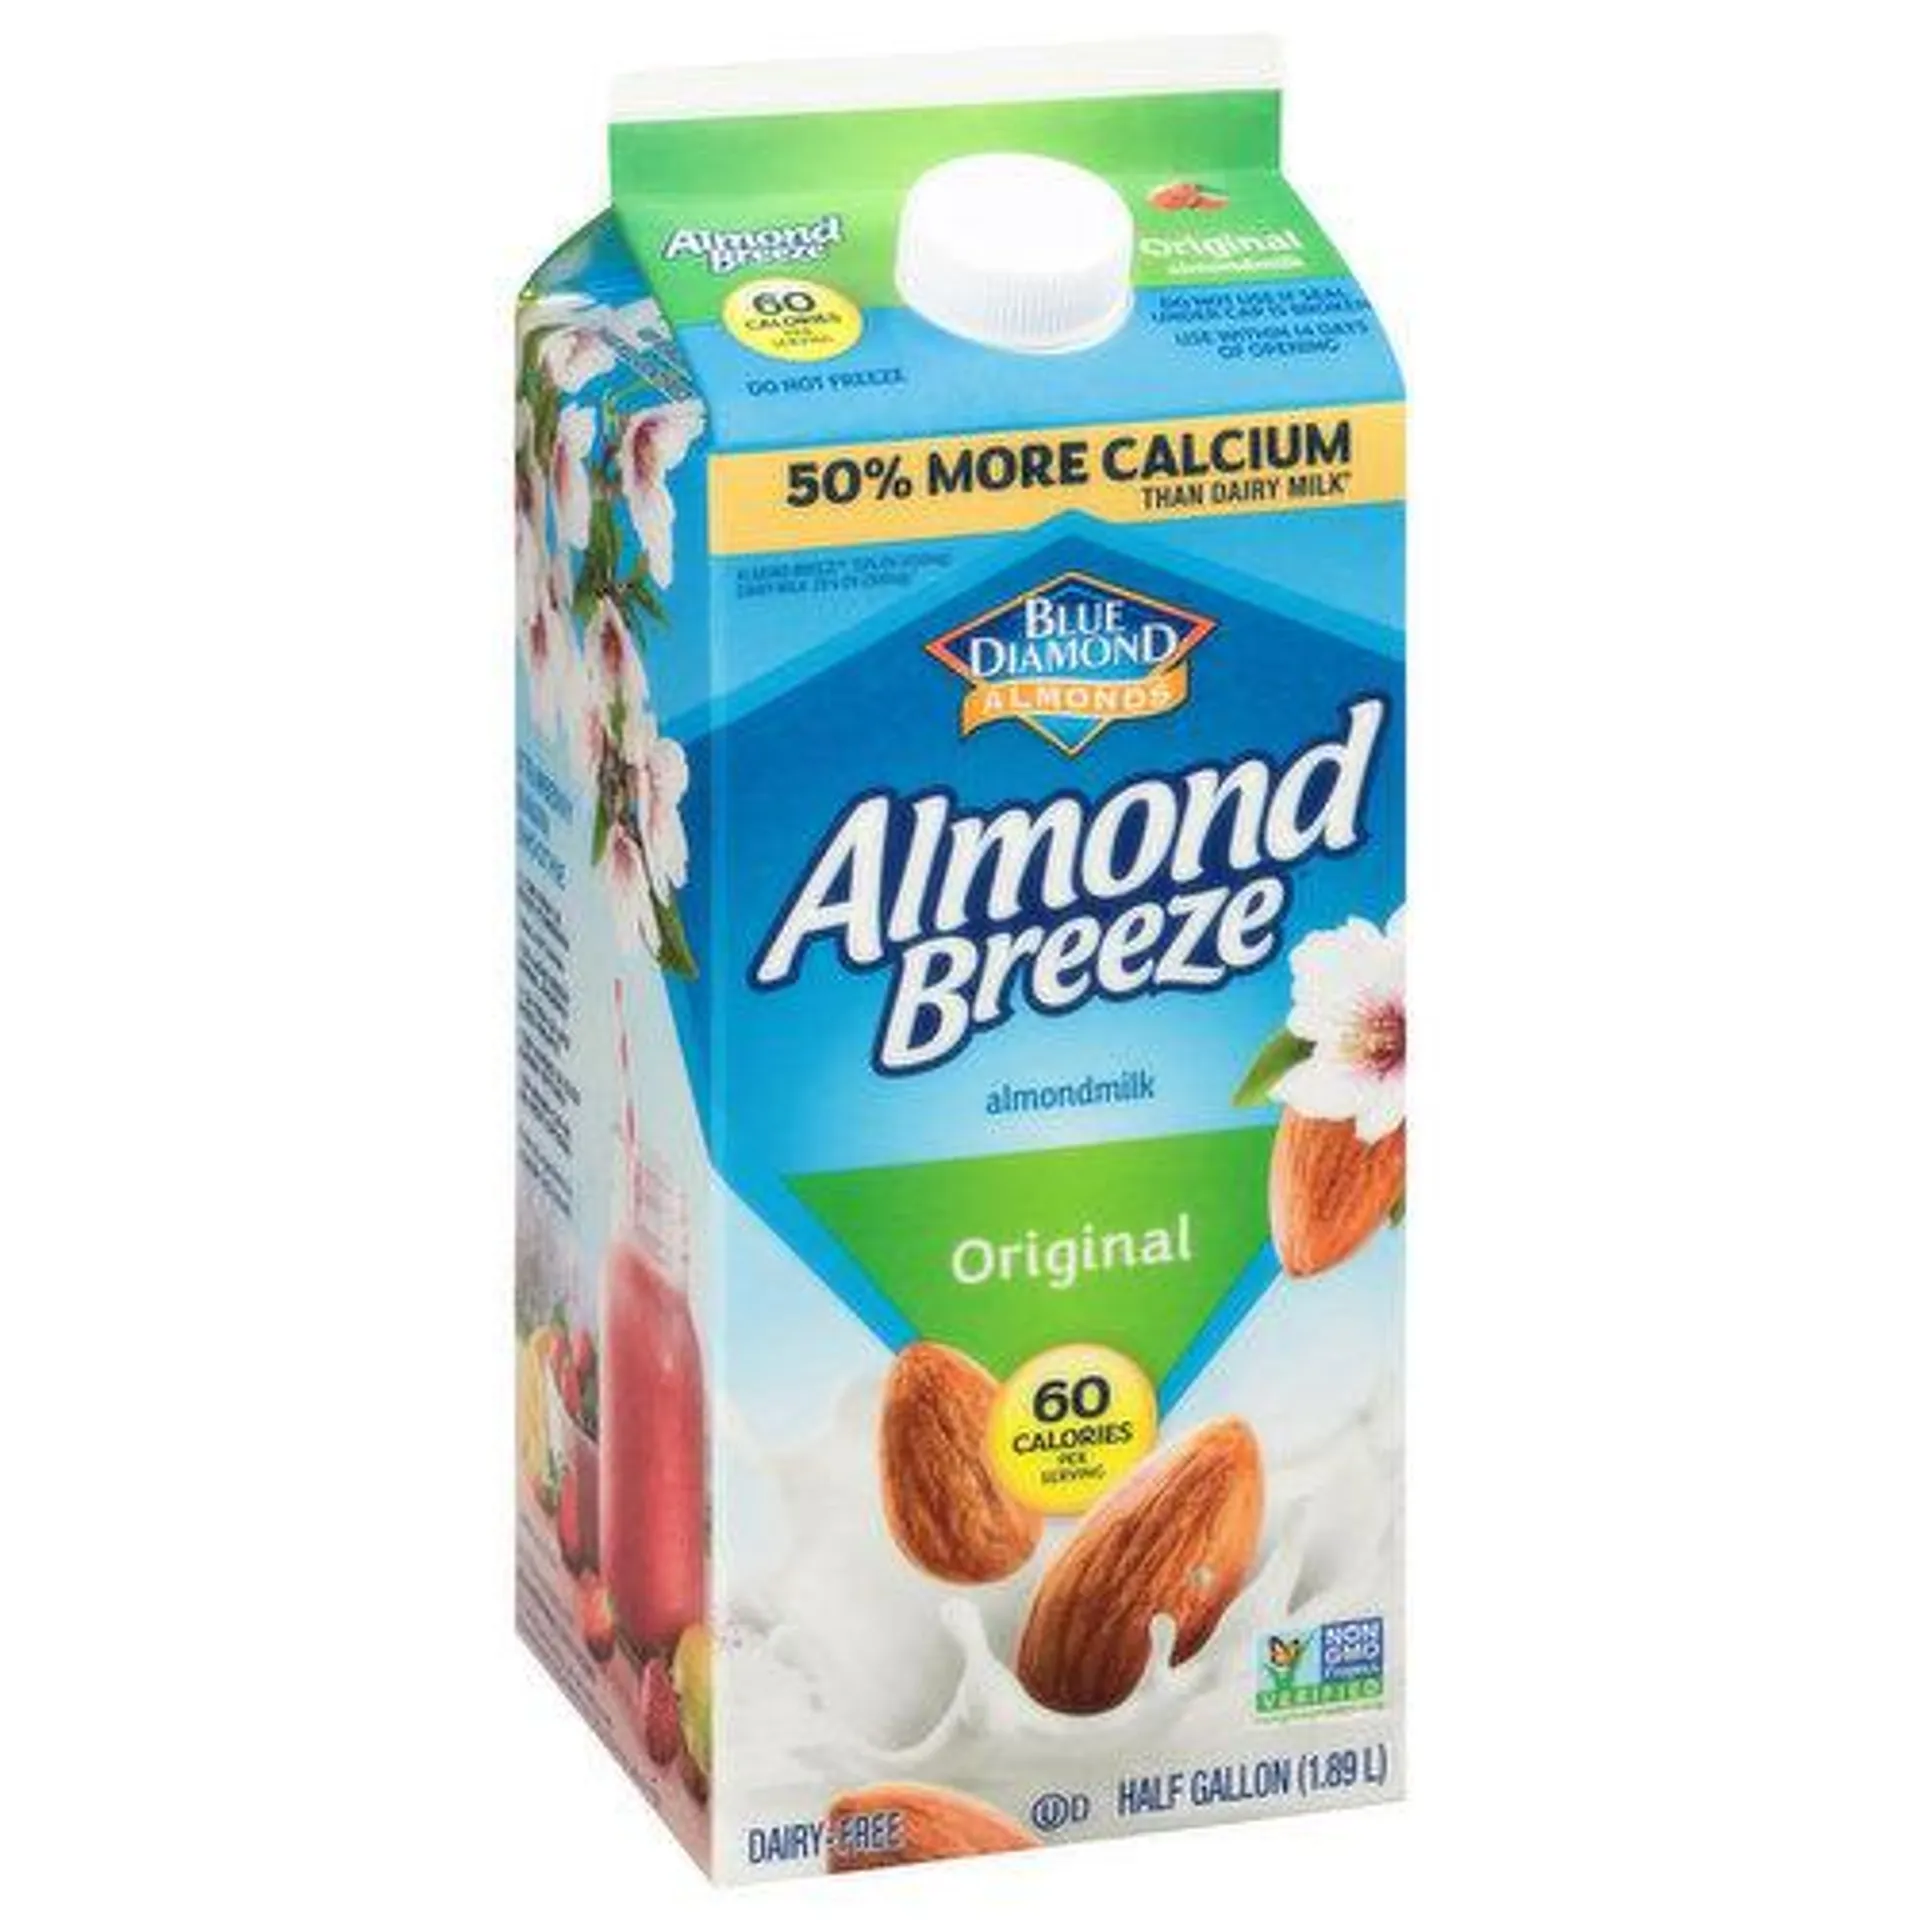 Almond Breeze Almondmilk, Original - 0.5 Gallon